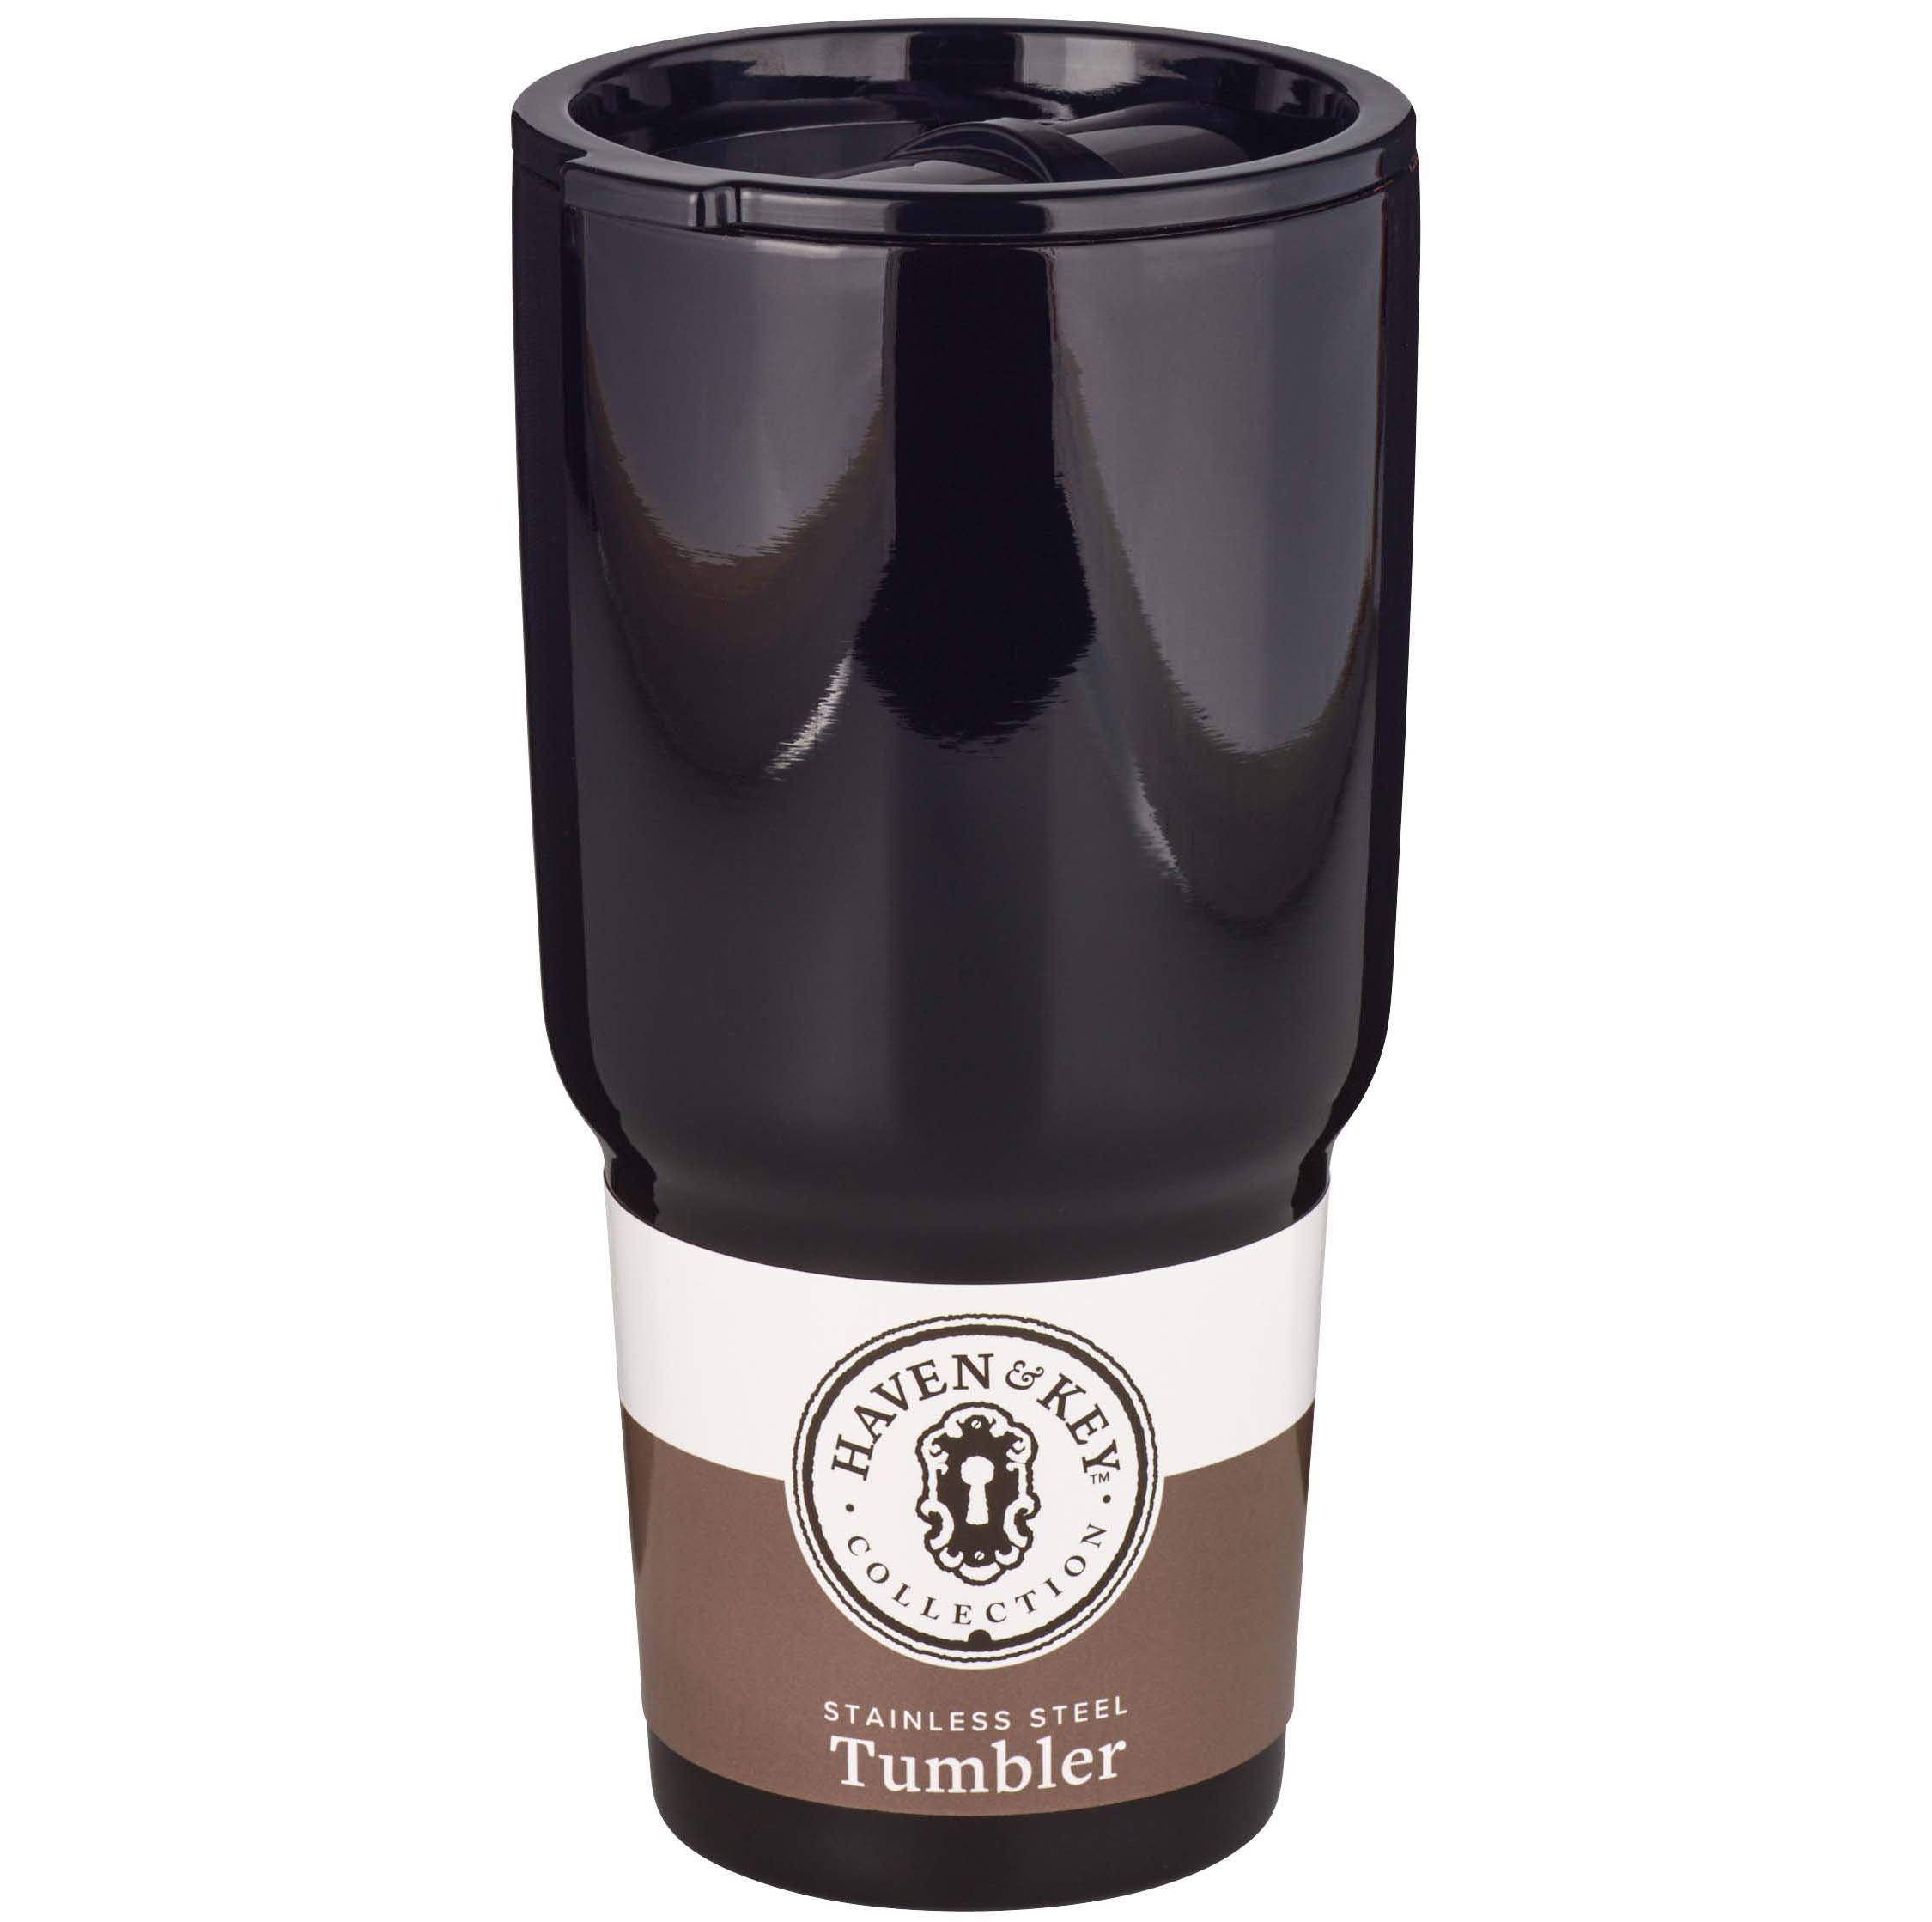 Zak! Designs Latah Tumbler - Black - Shop Cups & Tumblers at H-E-B